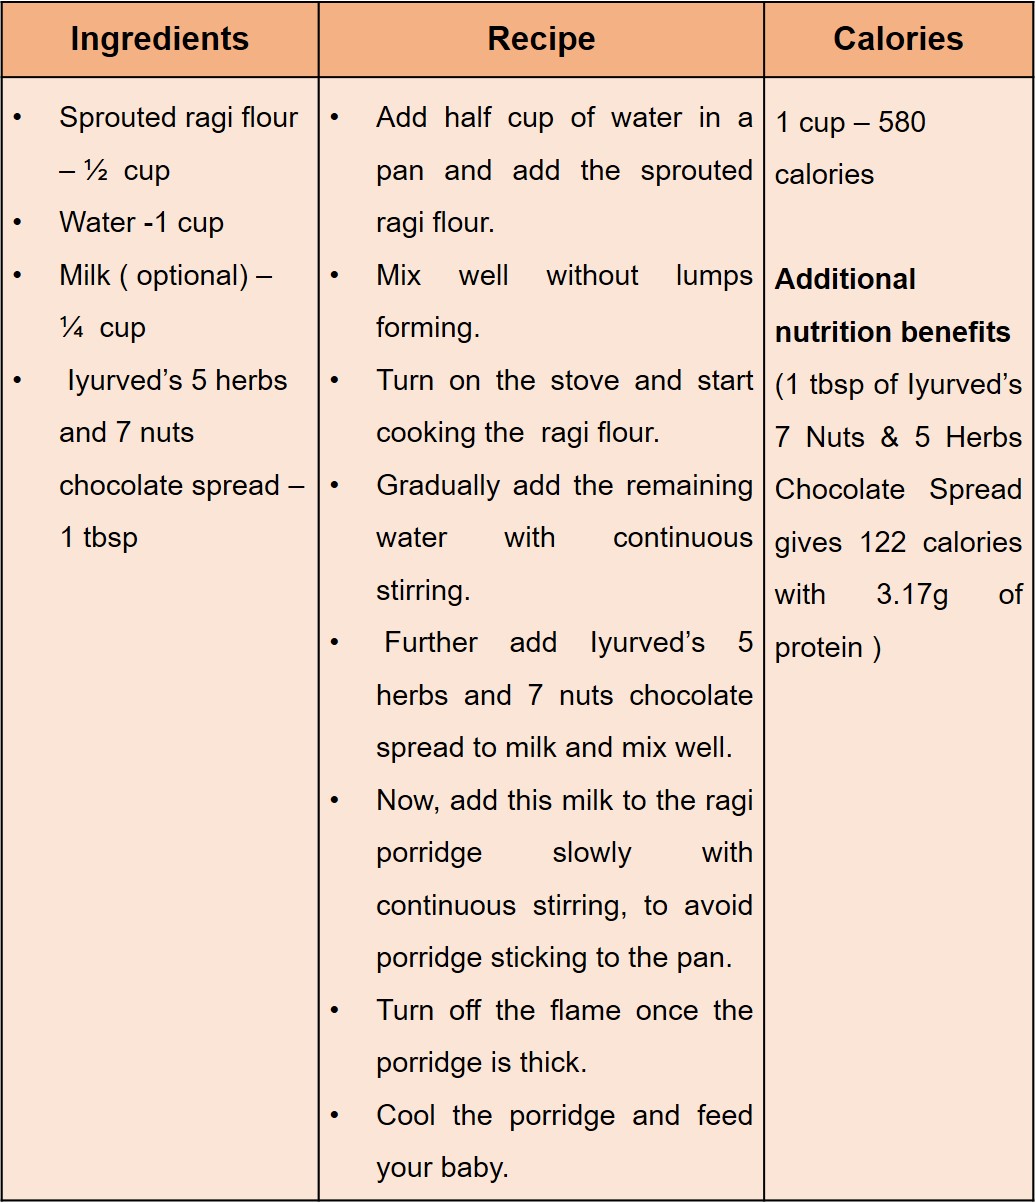 ragi porridge recipe
health benefits of Ragi